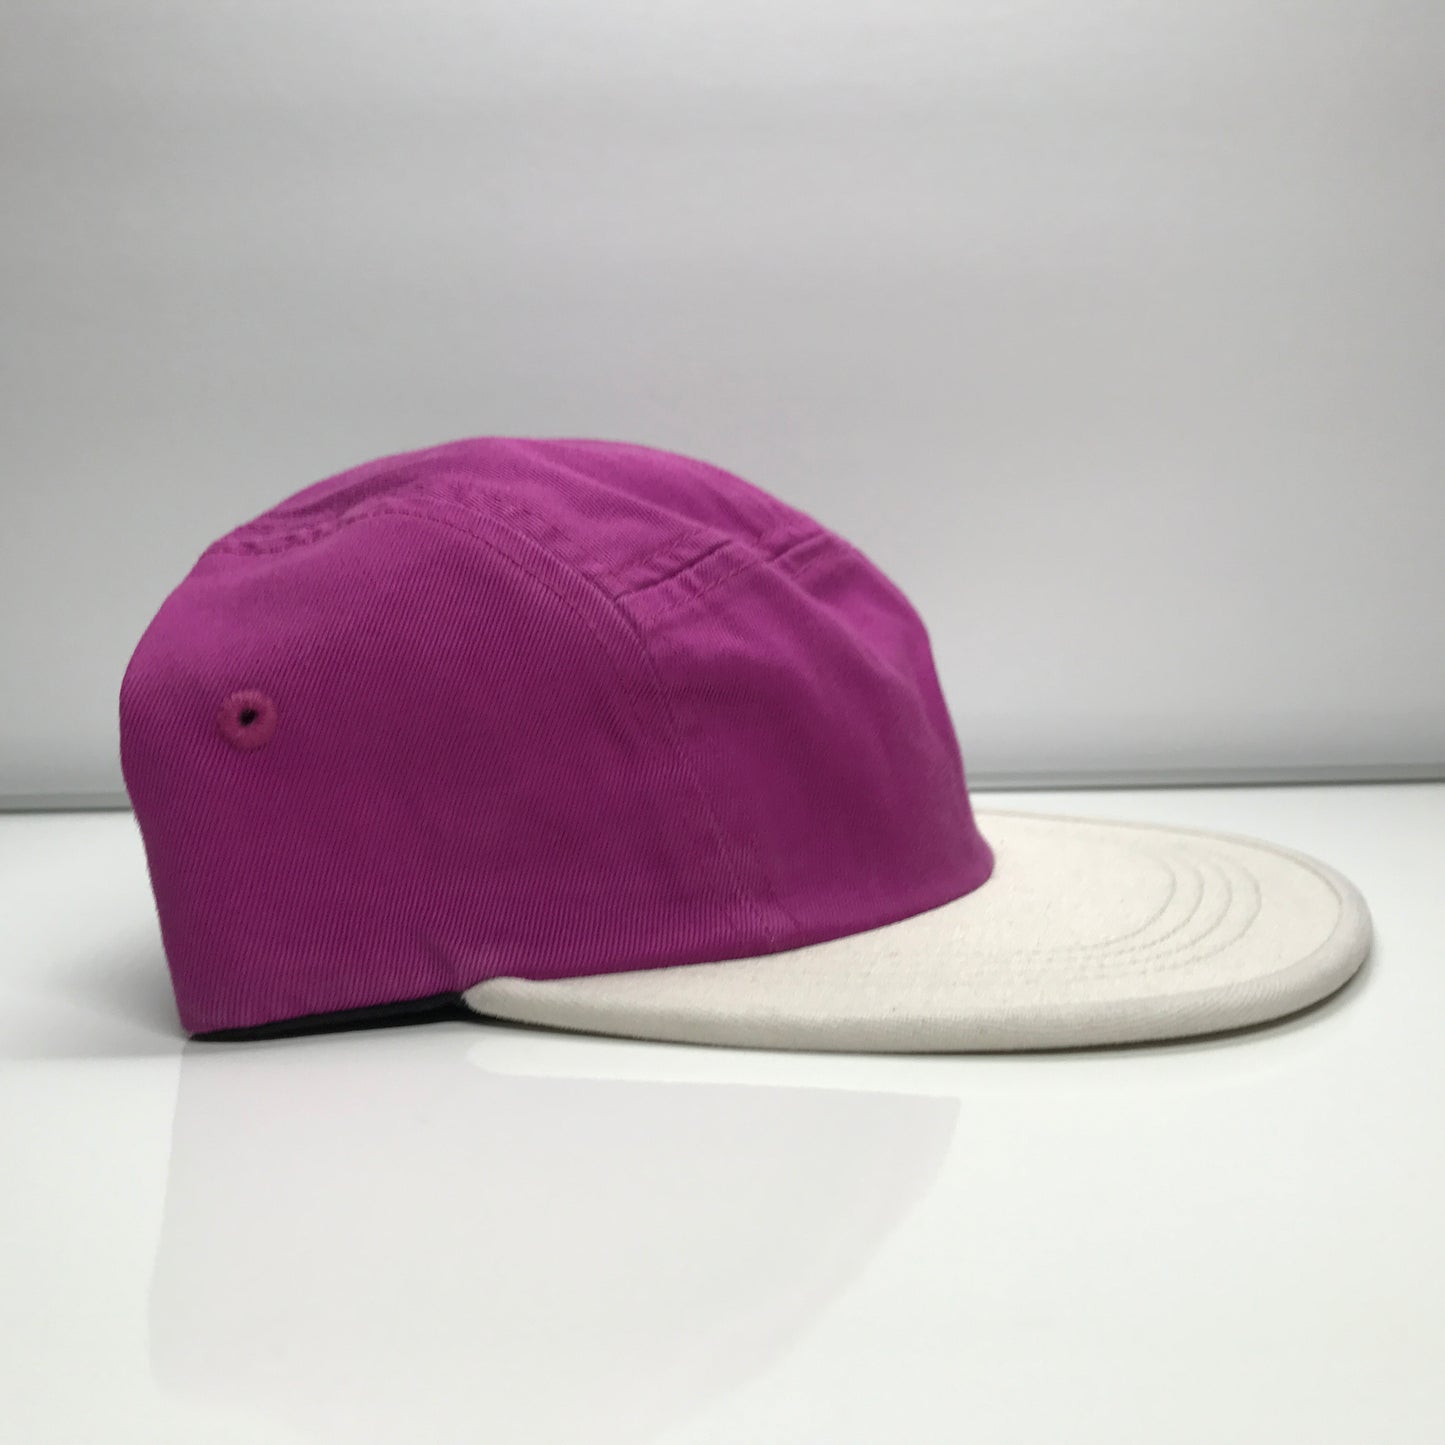 Supreme 2 Tone Twill Top Panel Camp Cap Hat SS17 Magenta Pink